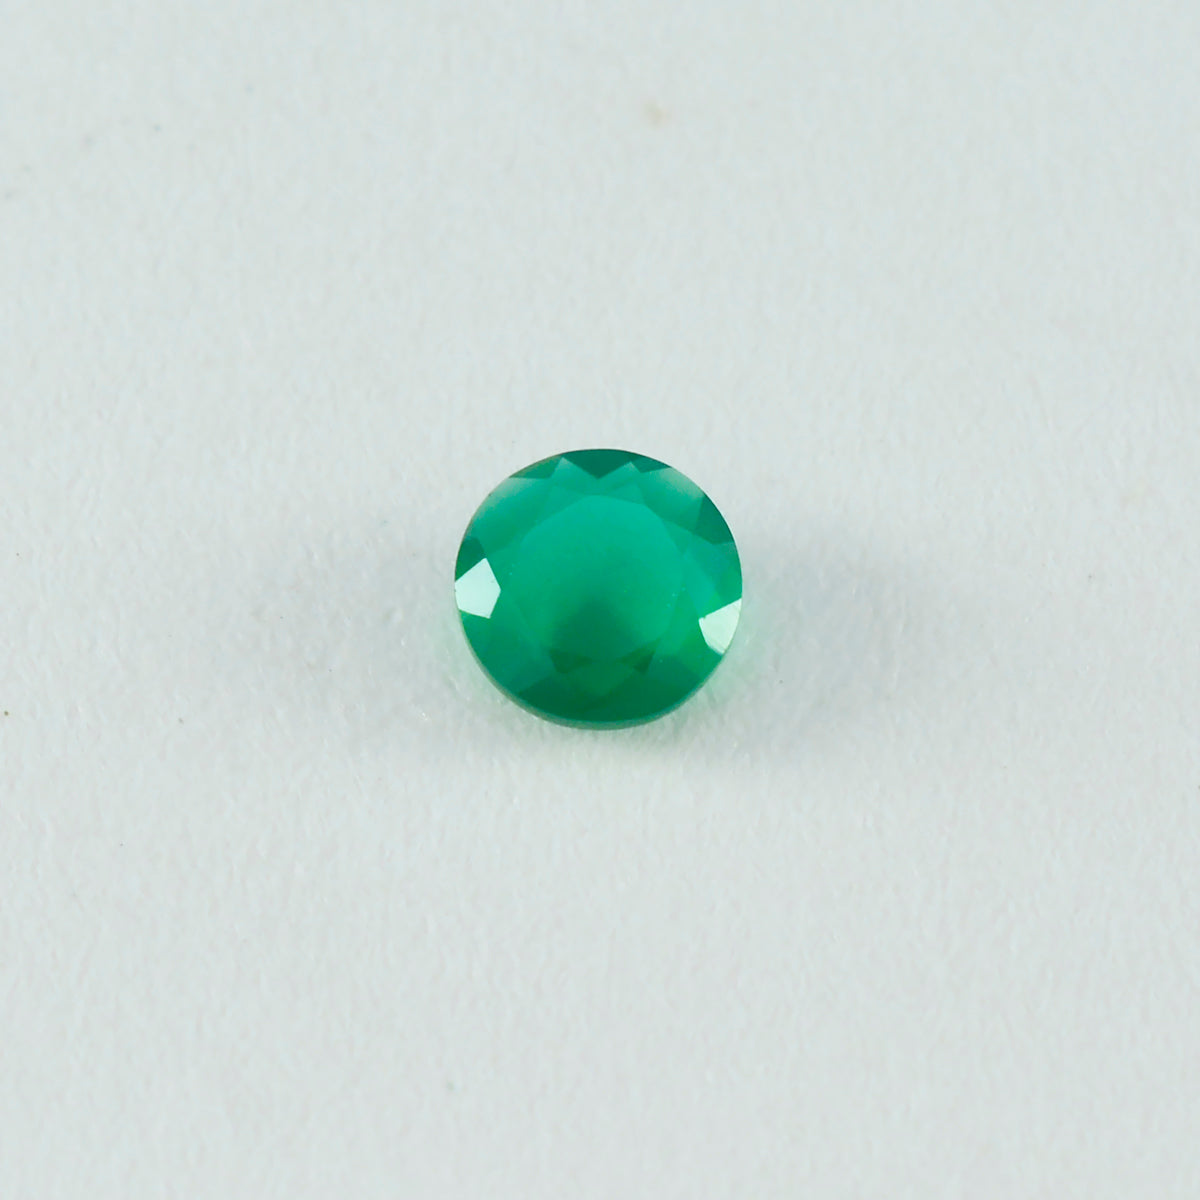 riyogems 1pc ナチュラル グリーン ジャスパー ファセット 4x4 mm ラウンド形状の美しい品質の石